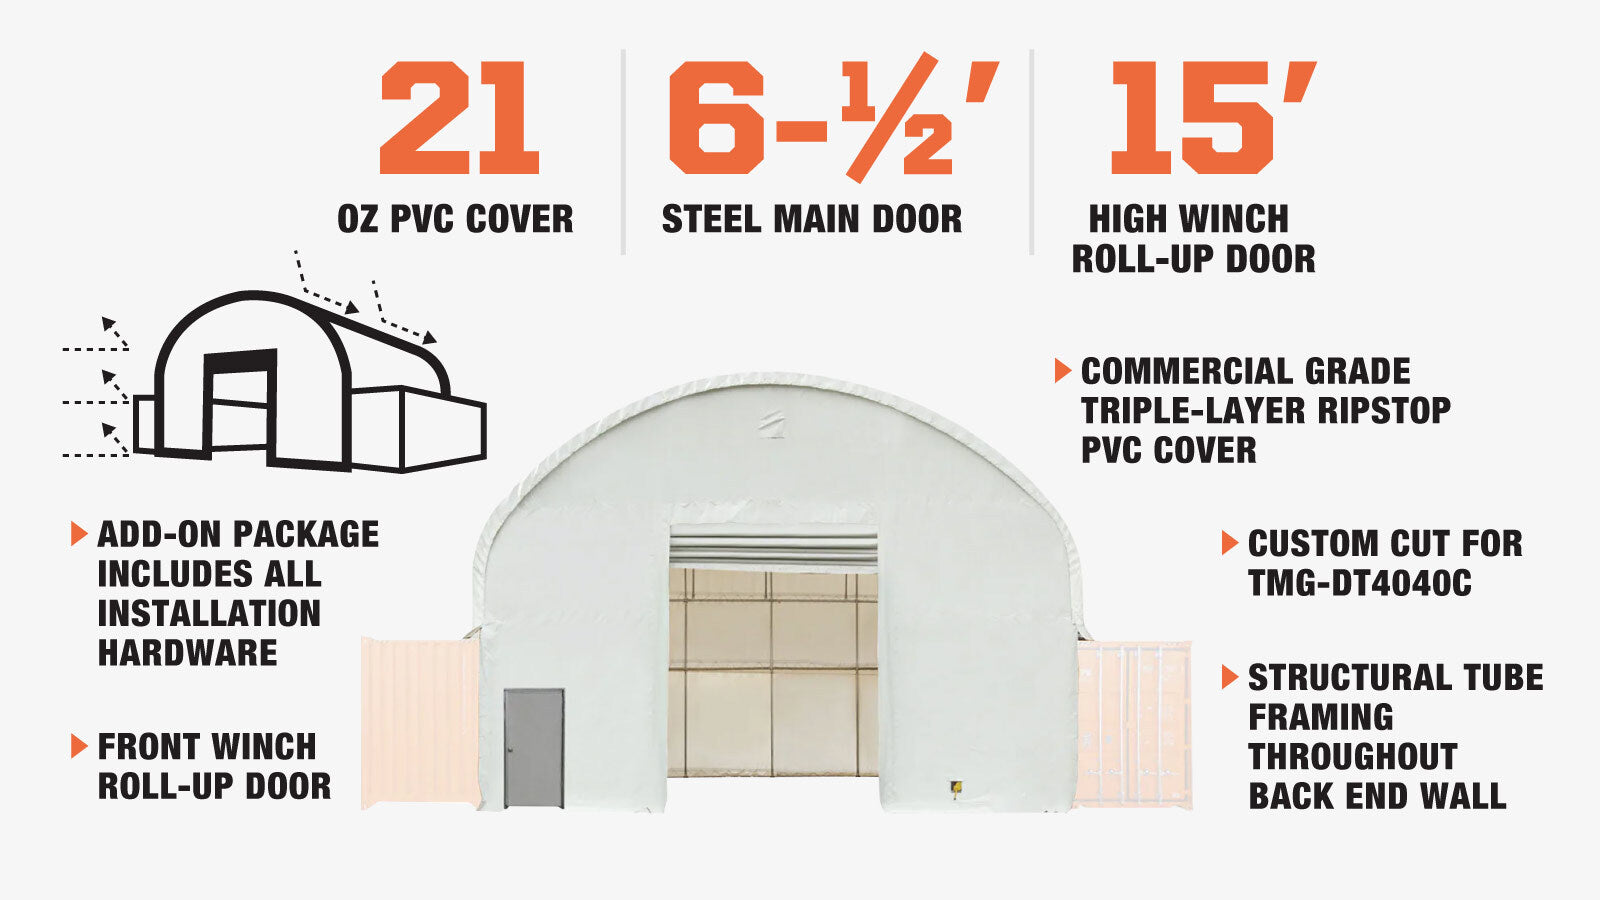 TMG Industrial Front & Back End Wall Kit, Custom Cut for TMG-DT4041C Dual Truss Container Shelter, Front Winch Roll-up Door, Steel Man Door, 21 oz PVC, TMG-DT40CFB-description-image